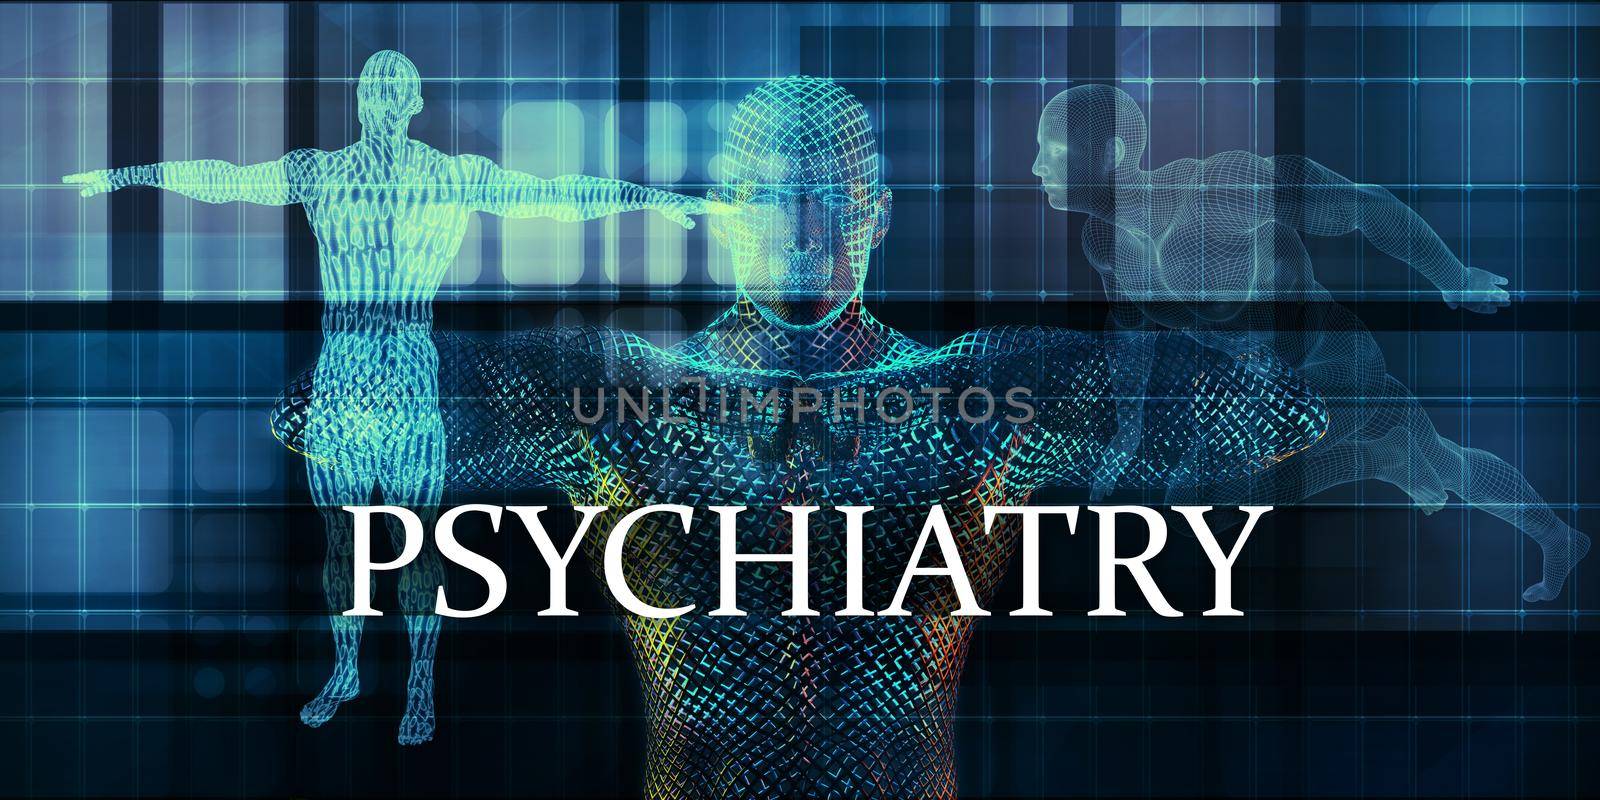 Psychiatry by kentoh